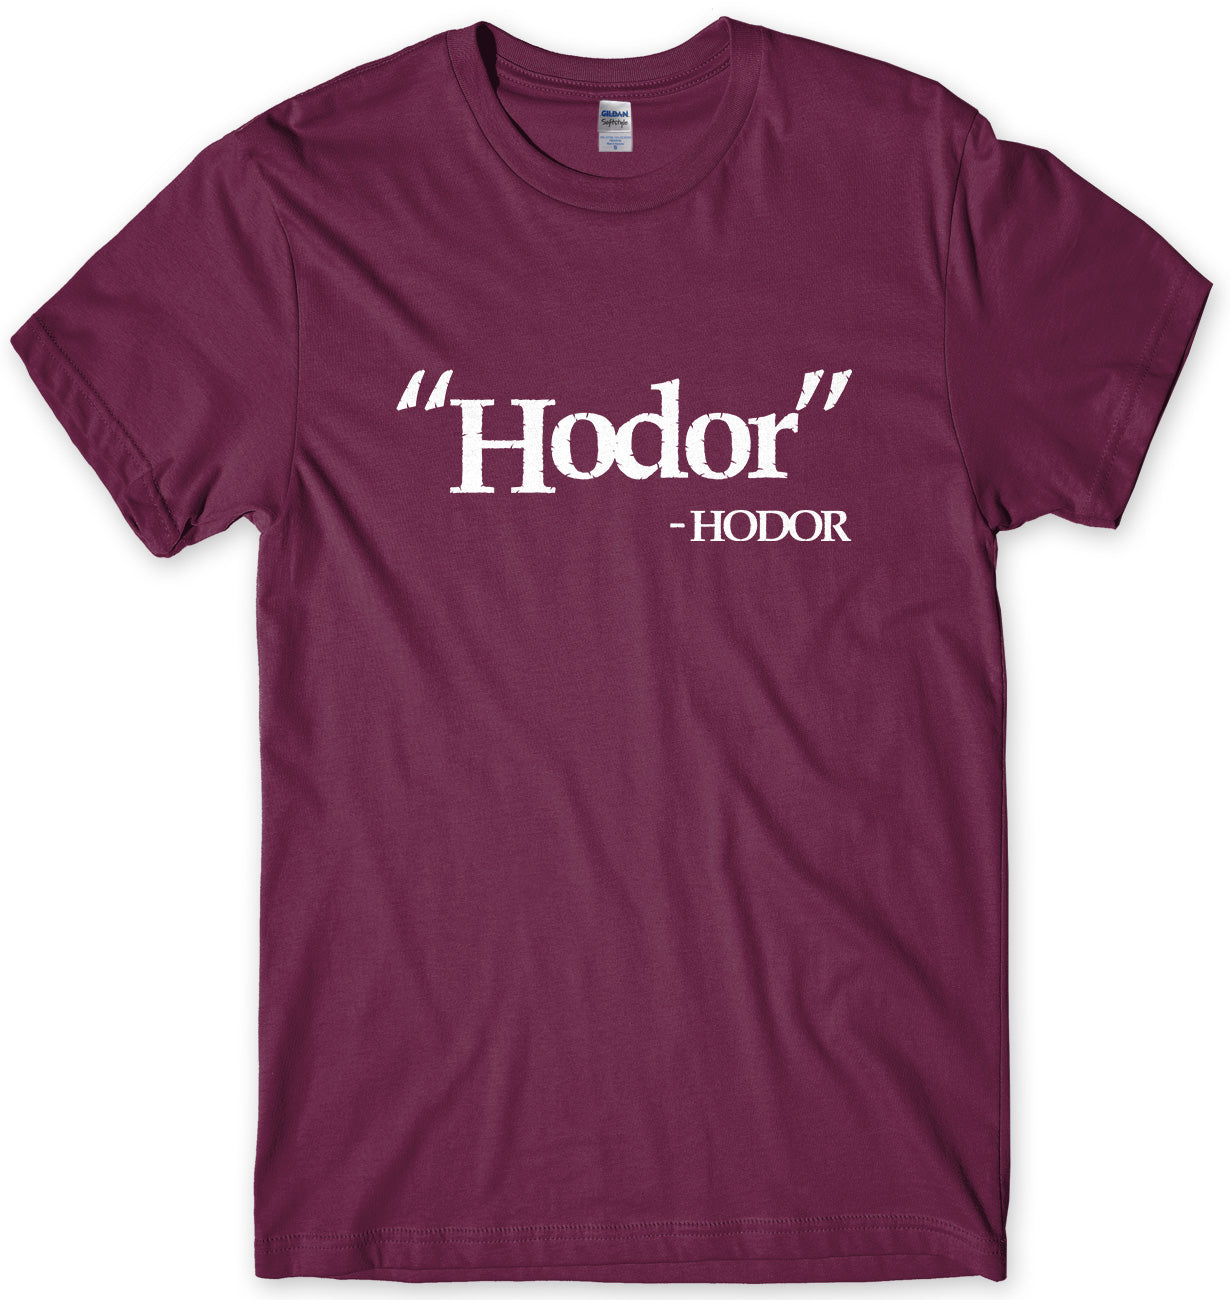 'HODOR' - HODOR - INSPIRED BY GAME OF THRONES MENS UNISEX T-SHIRT